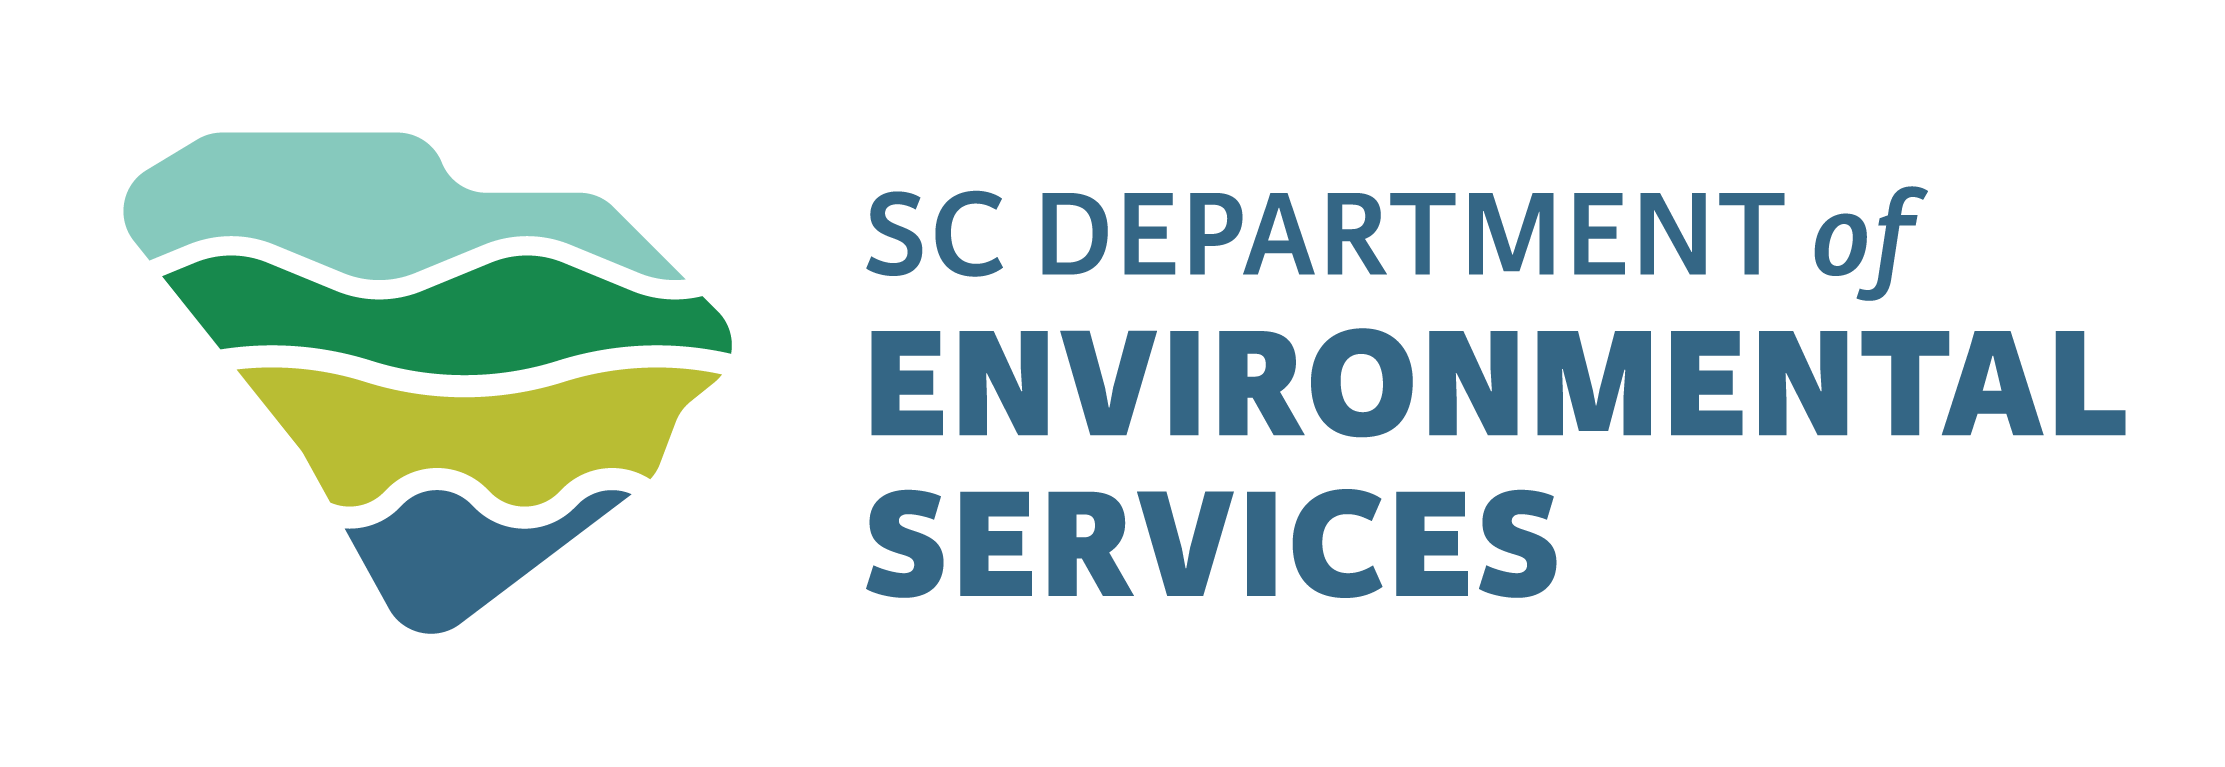 DEC Logo